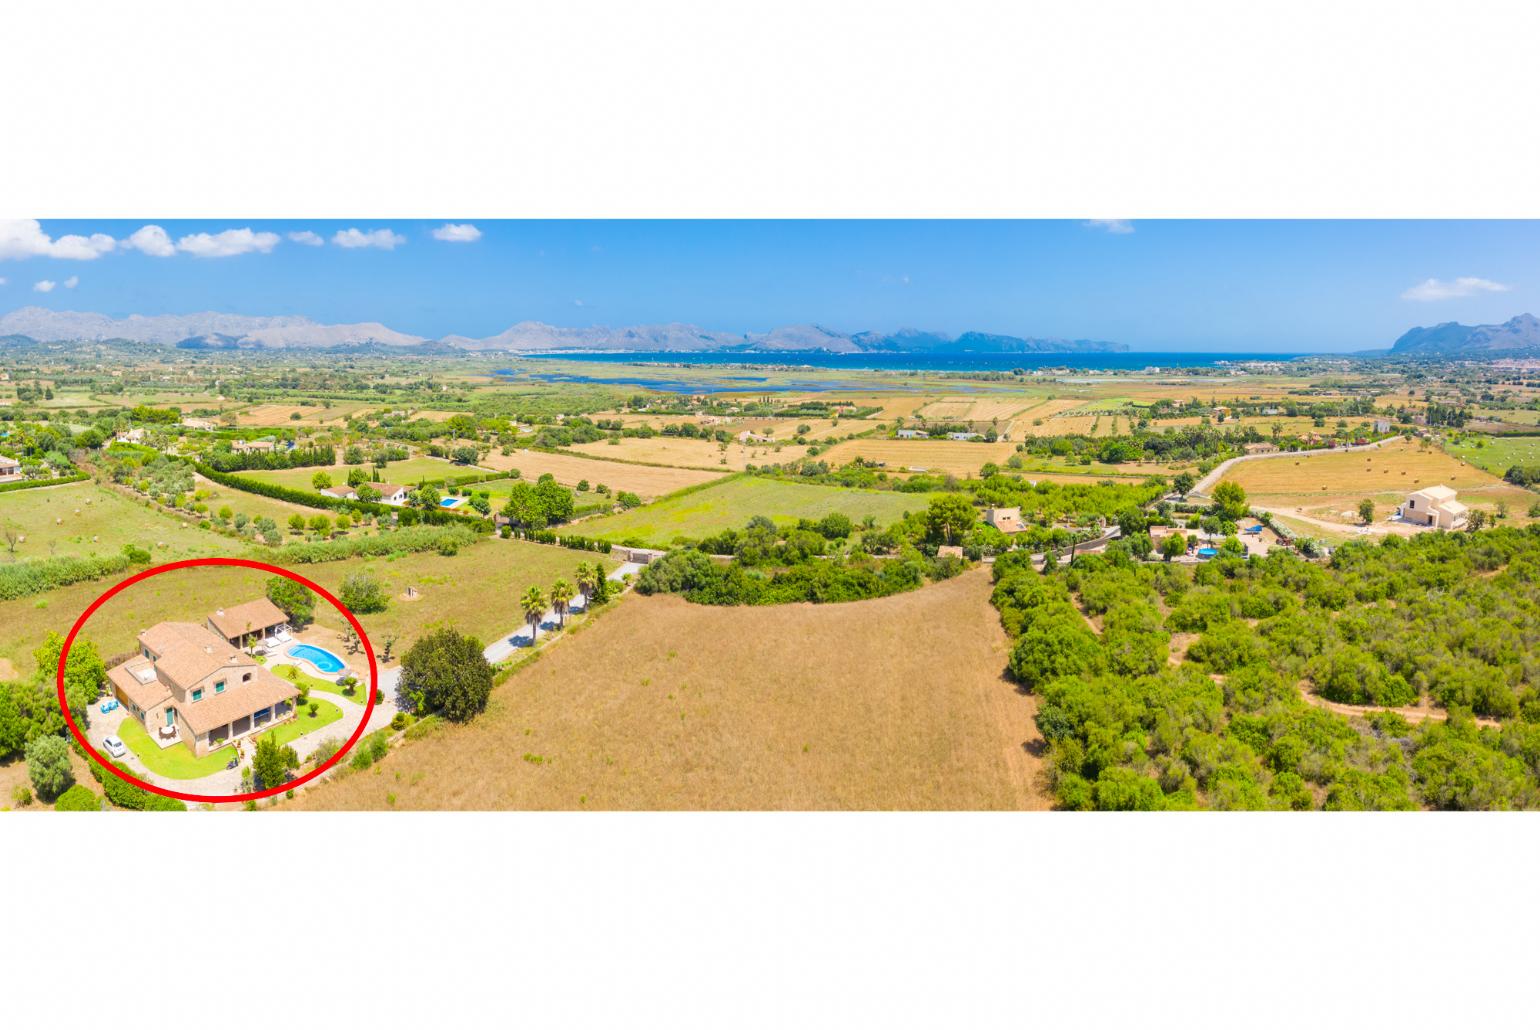 Aerial view showing location of Villa Padilla